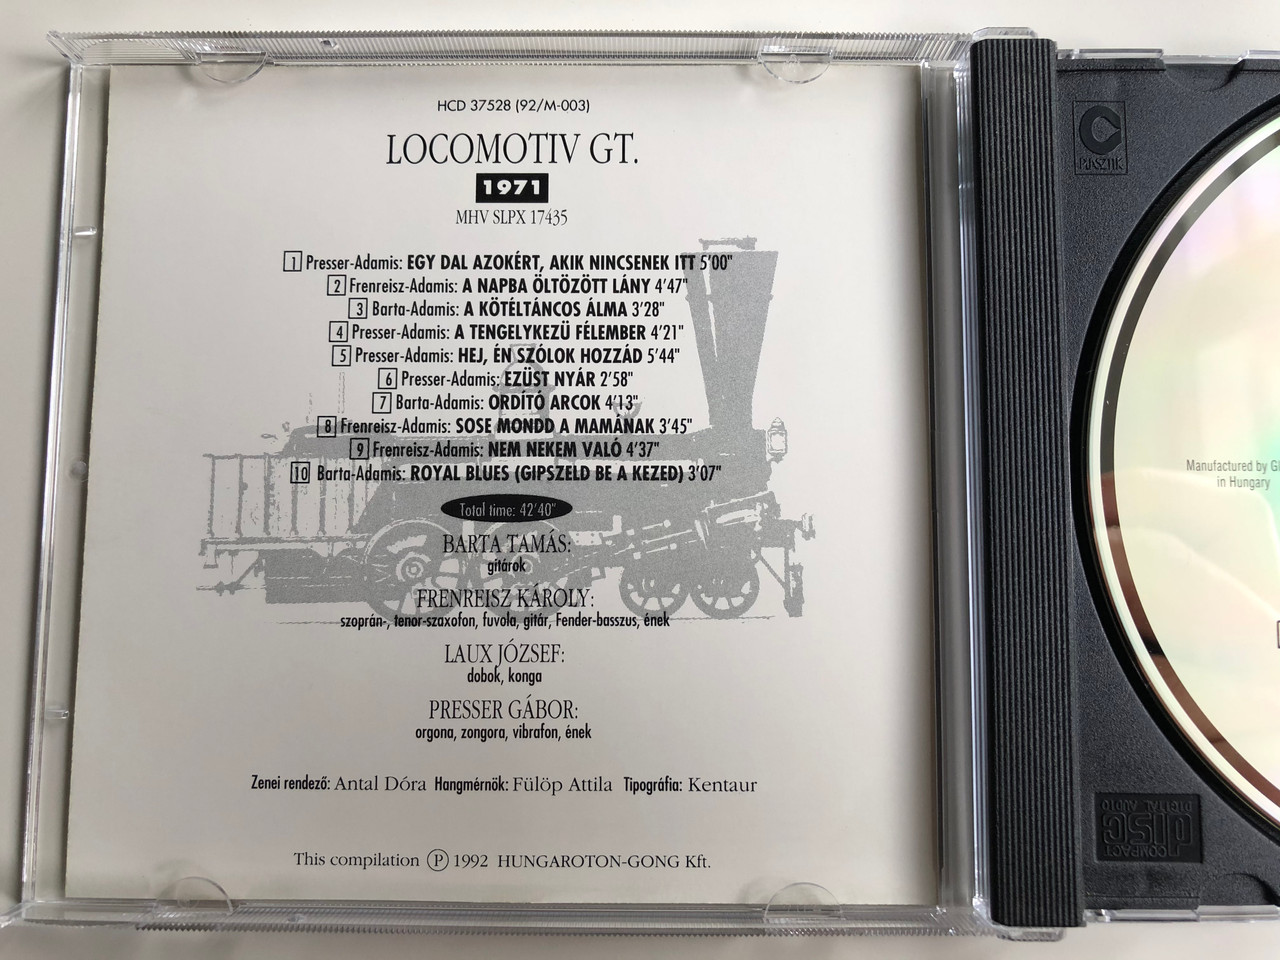 Locomotiv GT / Mega Audio CD 1992 Stereo / HCD 37528 - bibleinmylanguage